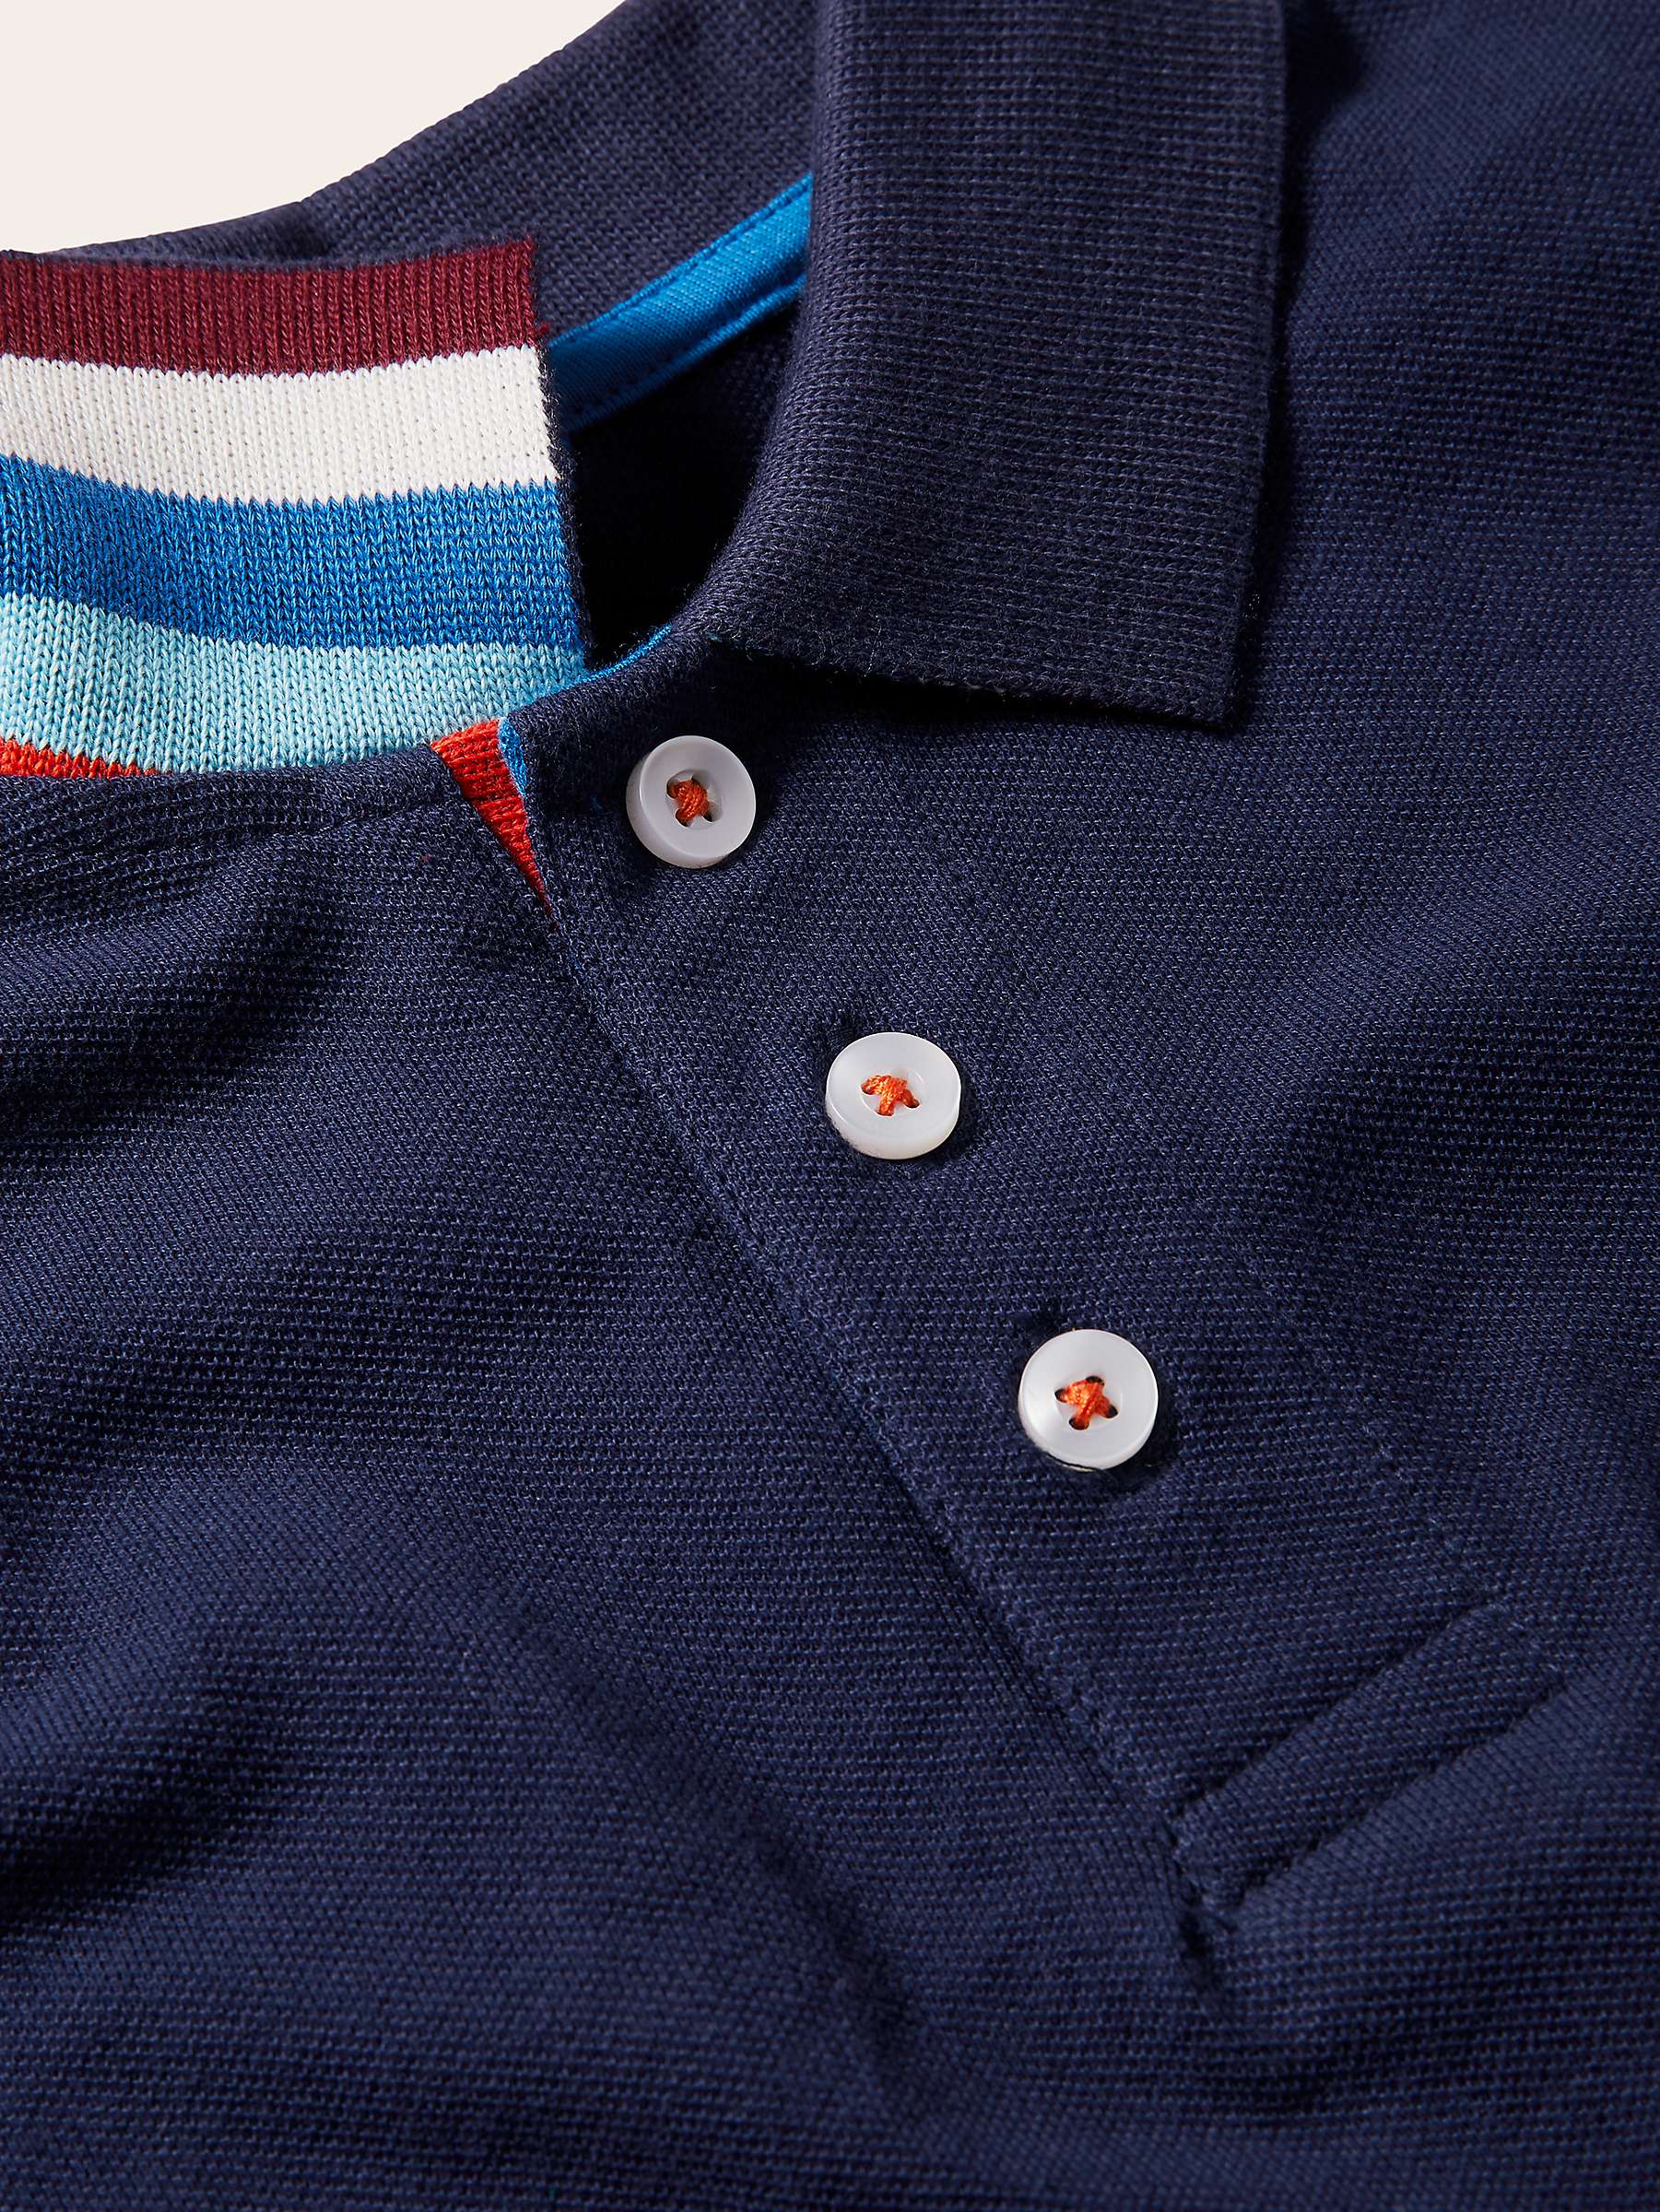 Buy Mini Boden Kids' Pique Polo Shirt, College Navy Online at johnlewis.com